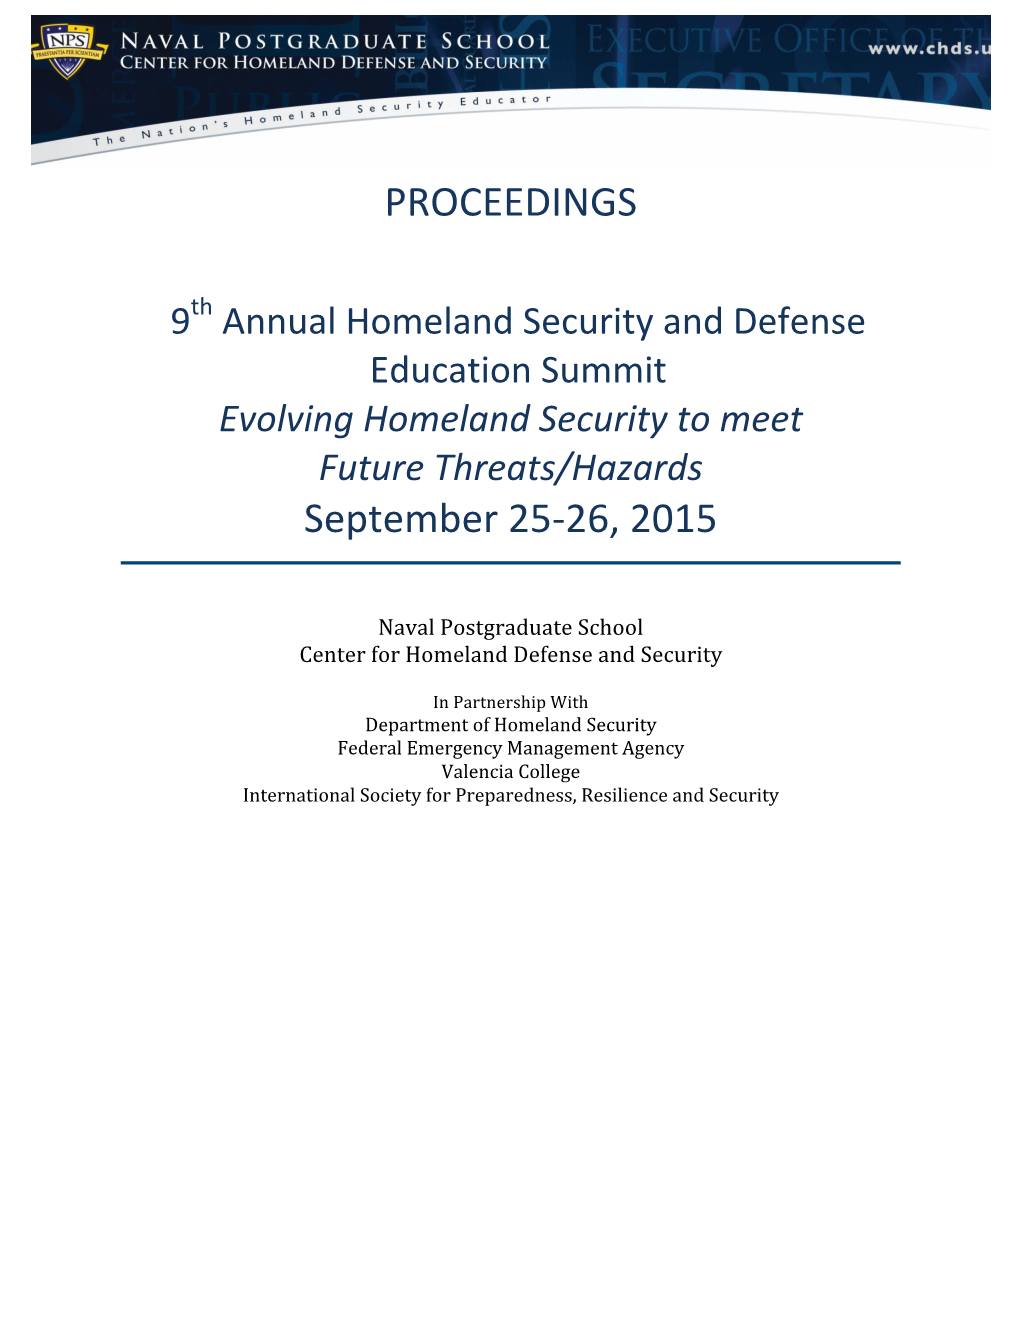 9Th Annual Homeland Defense & Security Education Summit